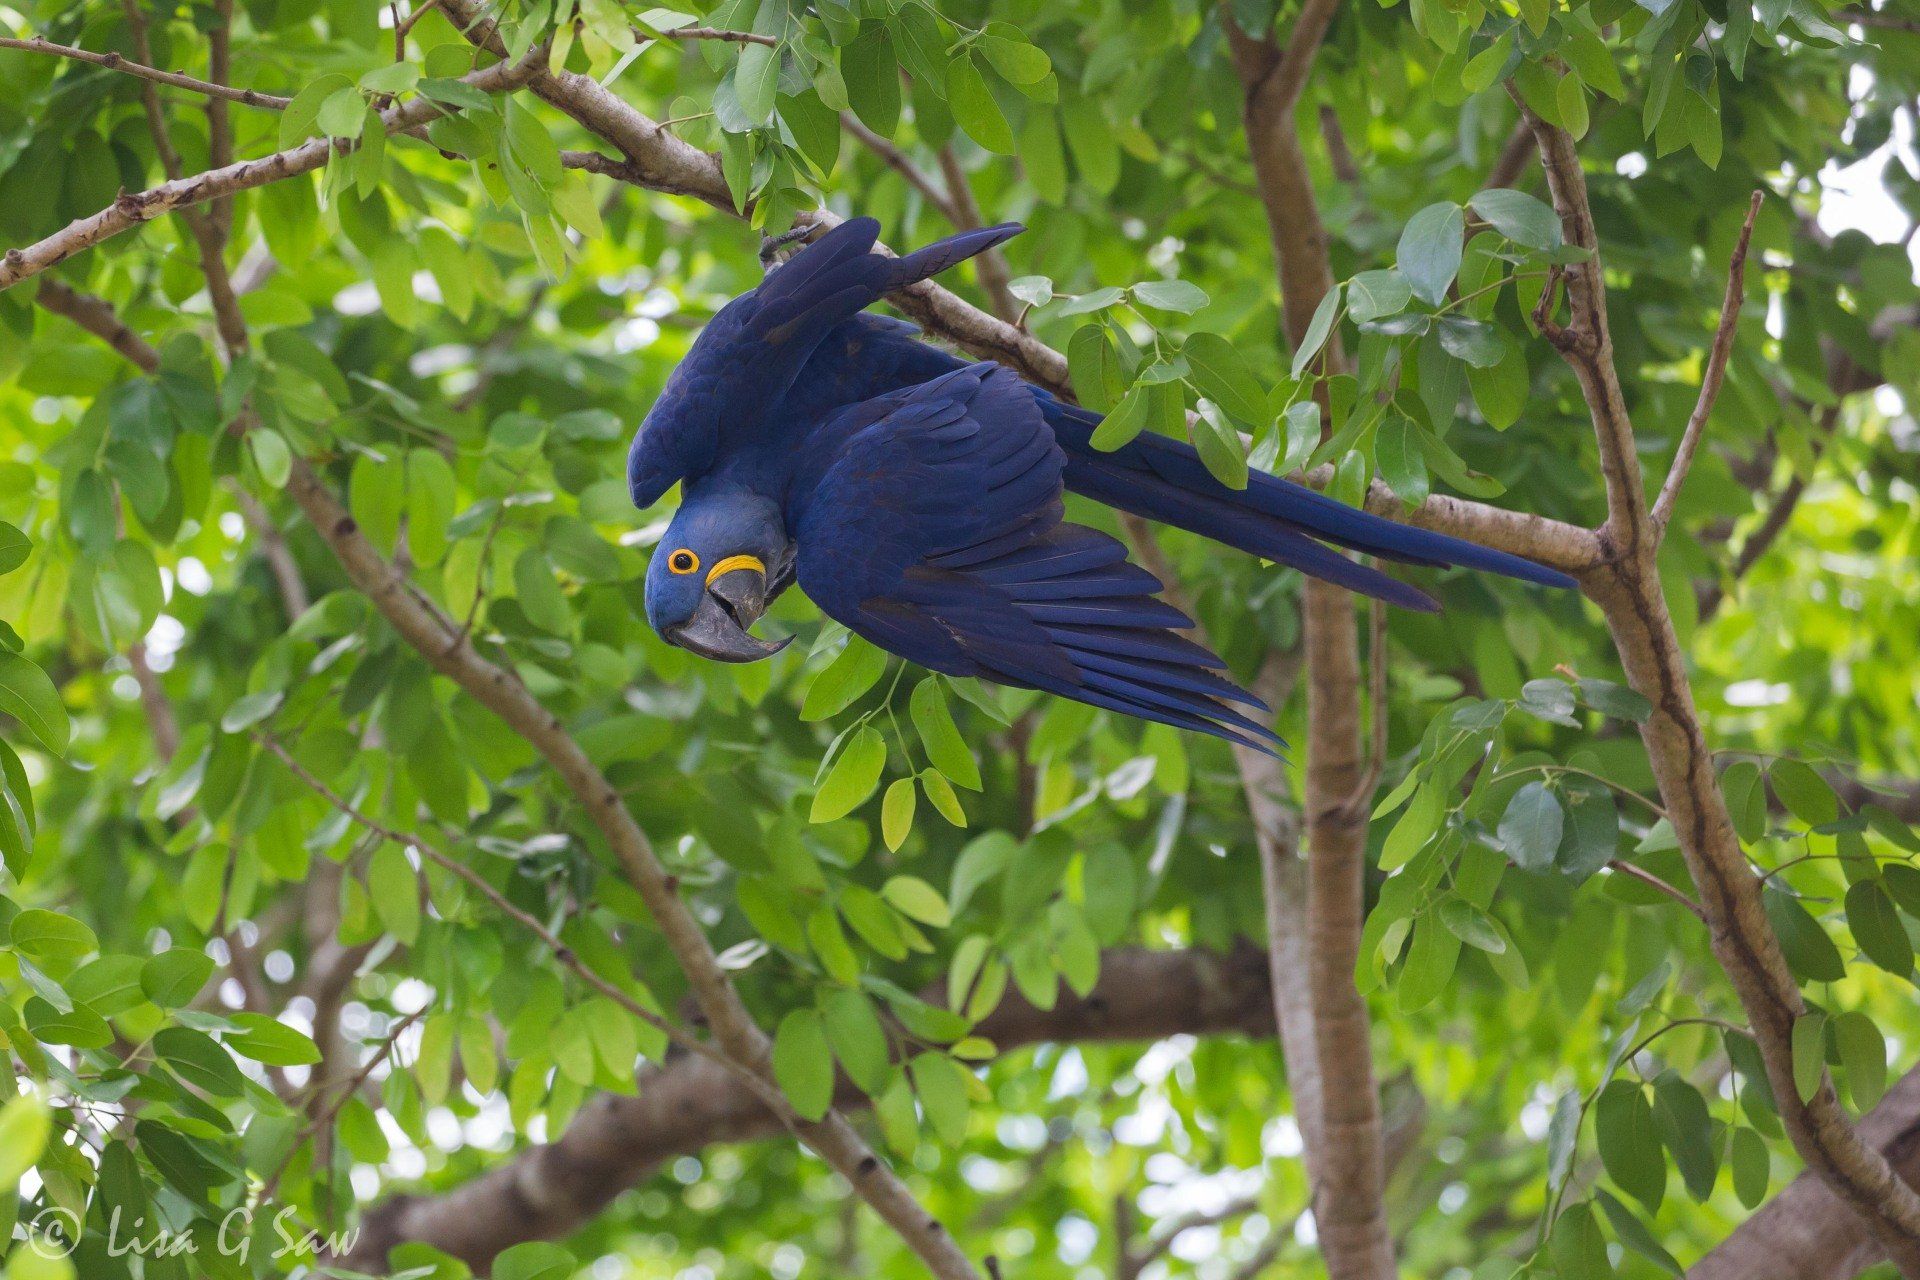 Hyacinth Macaw hanging upside down in tree